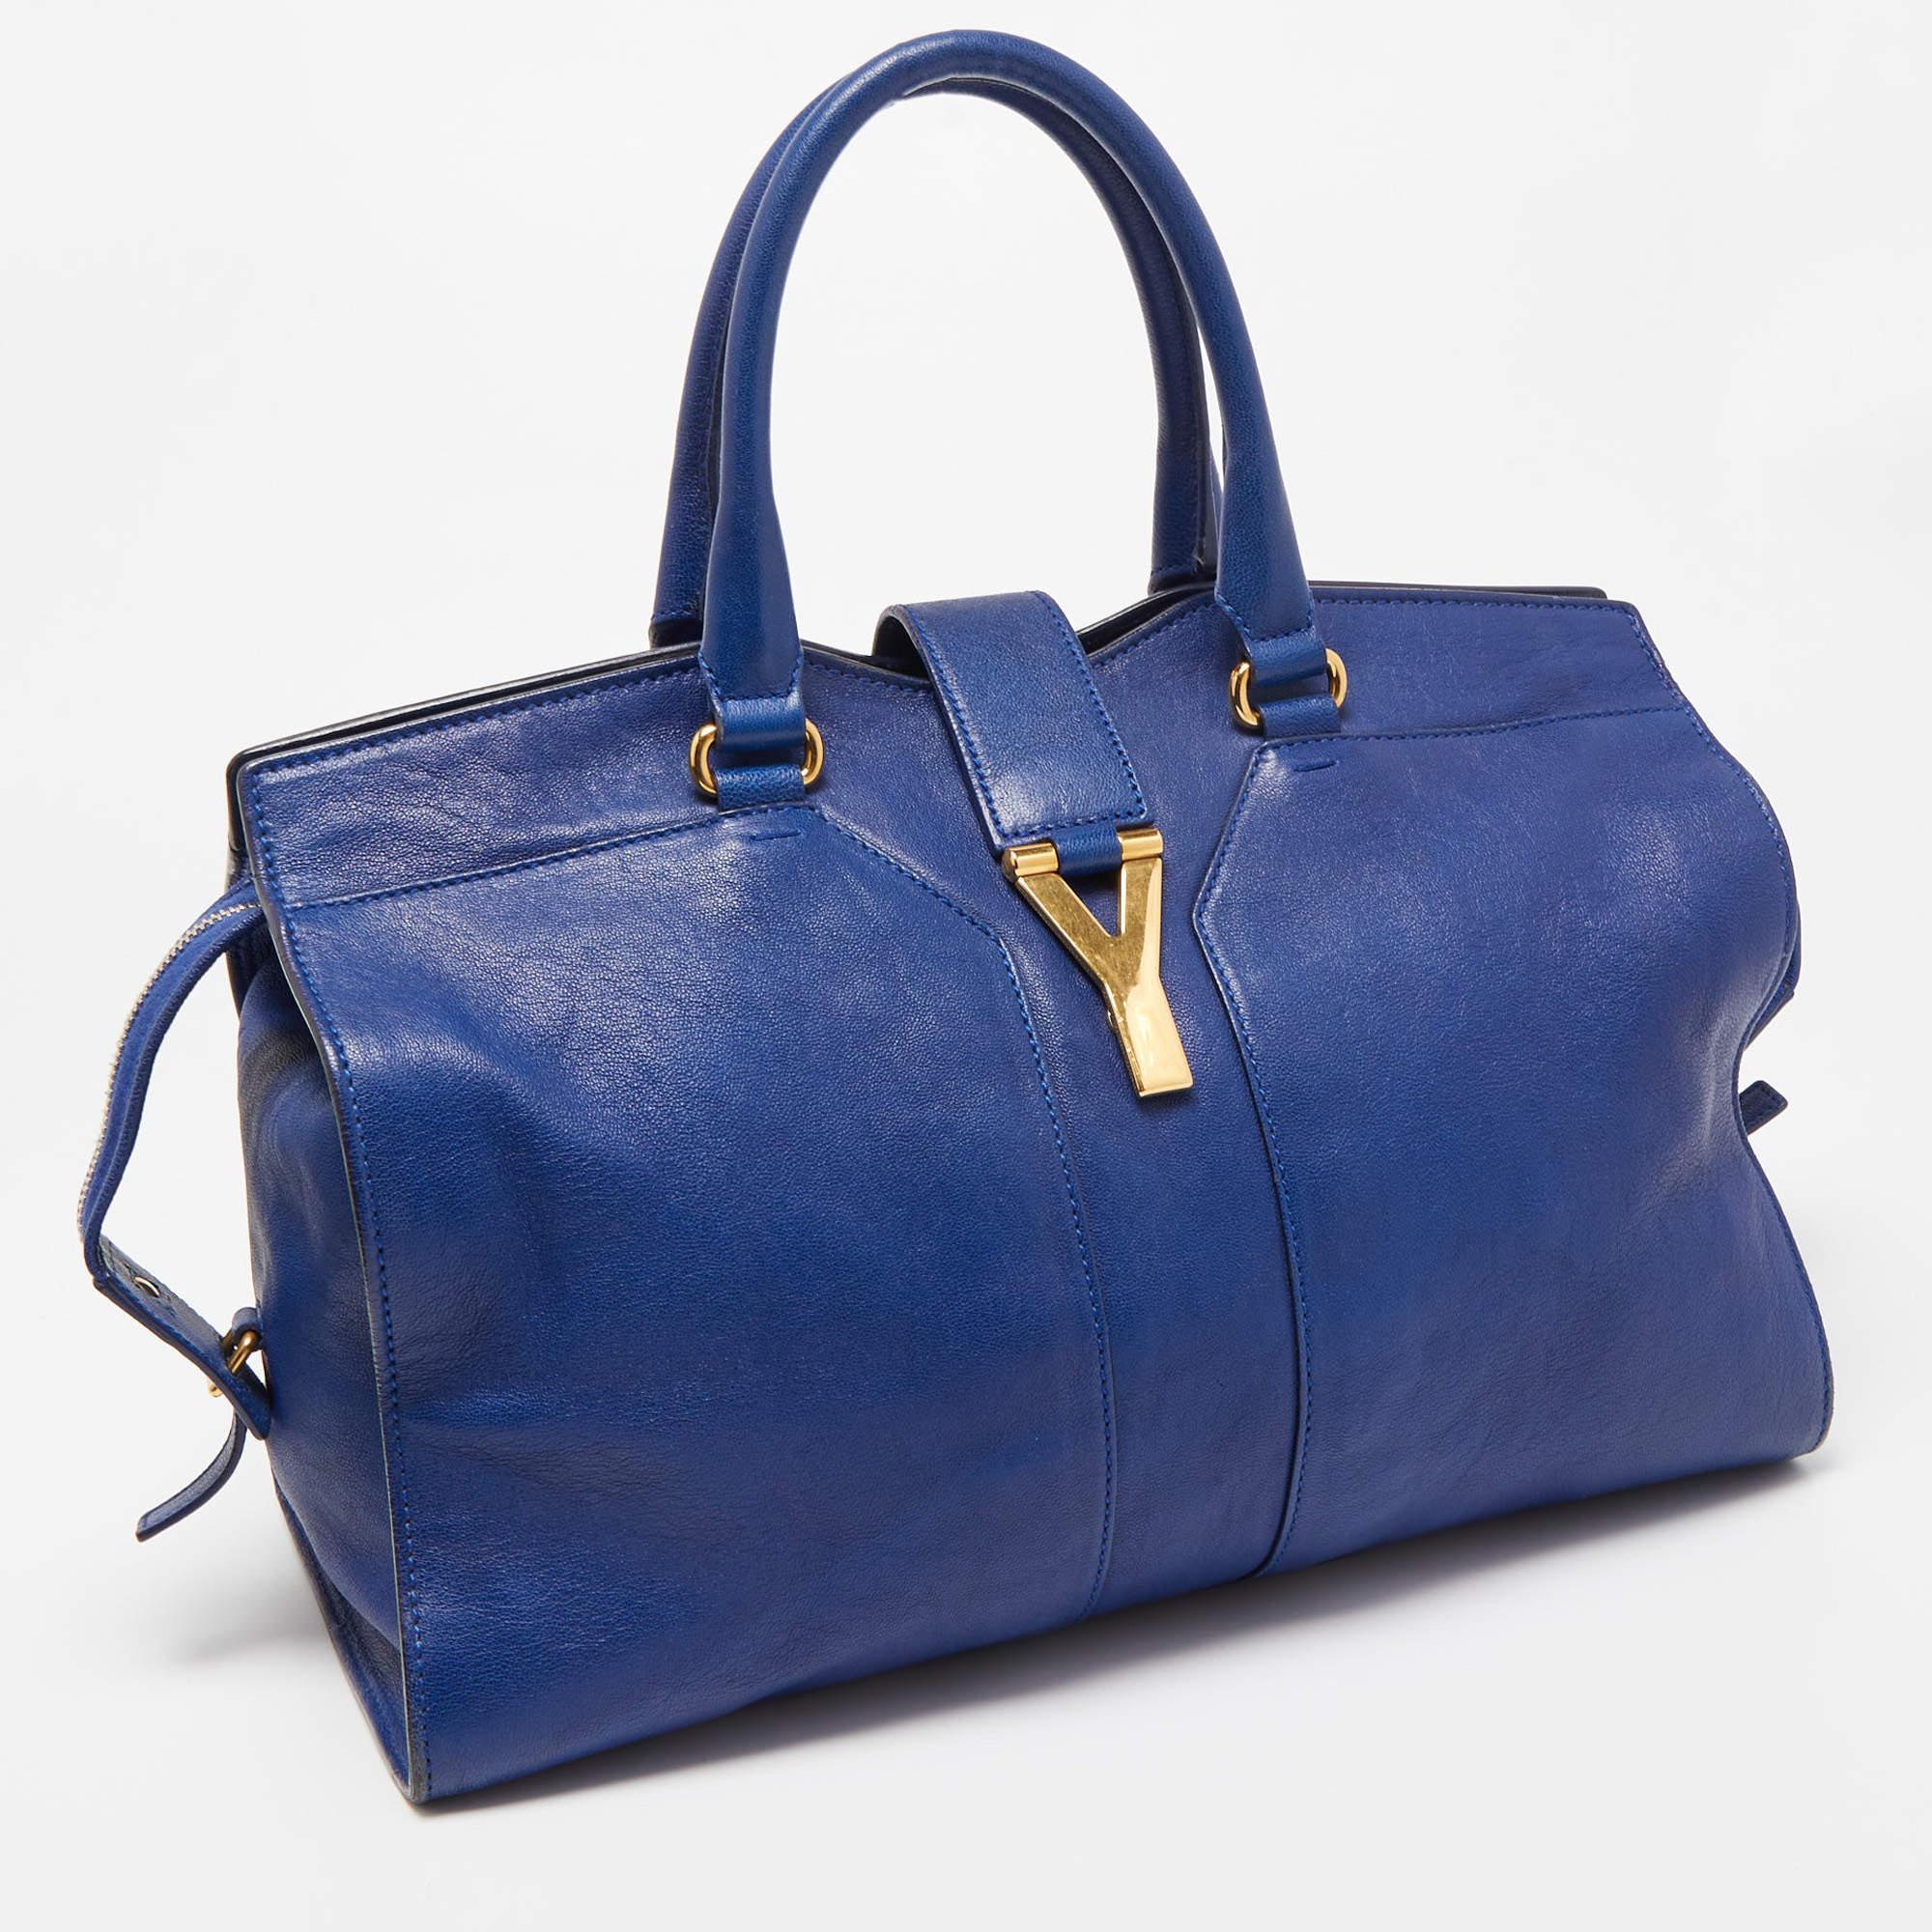 Yves Saint Laurent Blue Leather Medium Cabas Chyc Tote 11